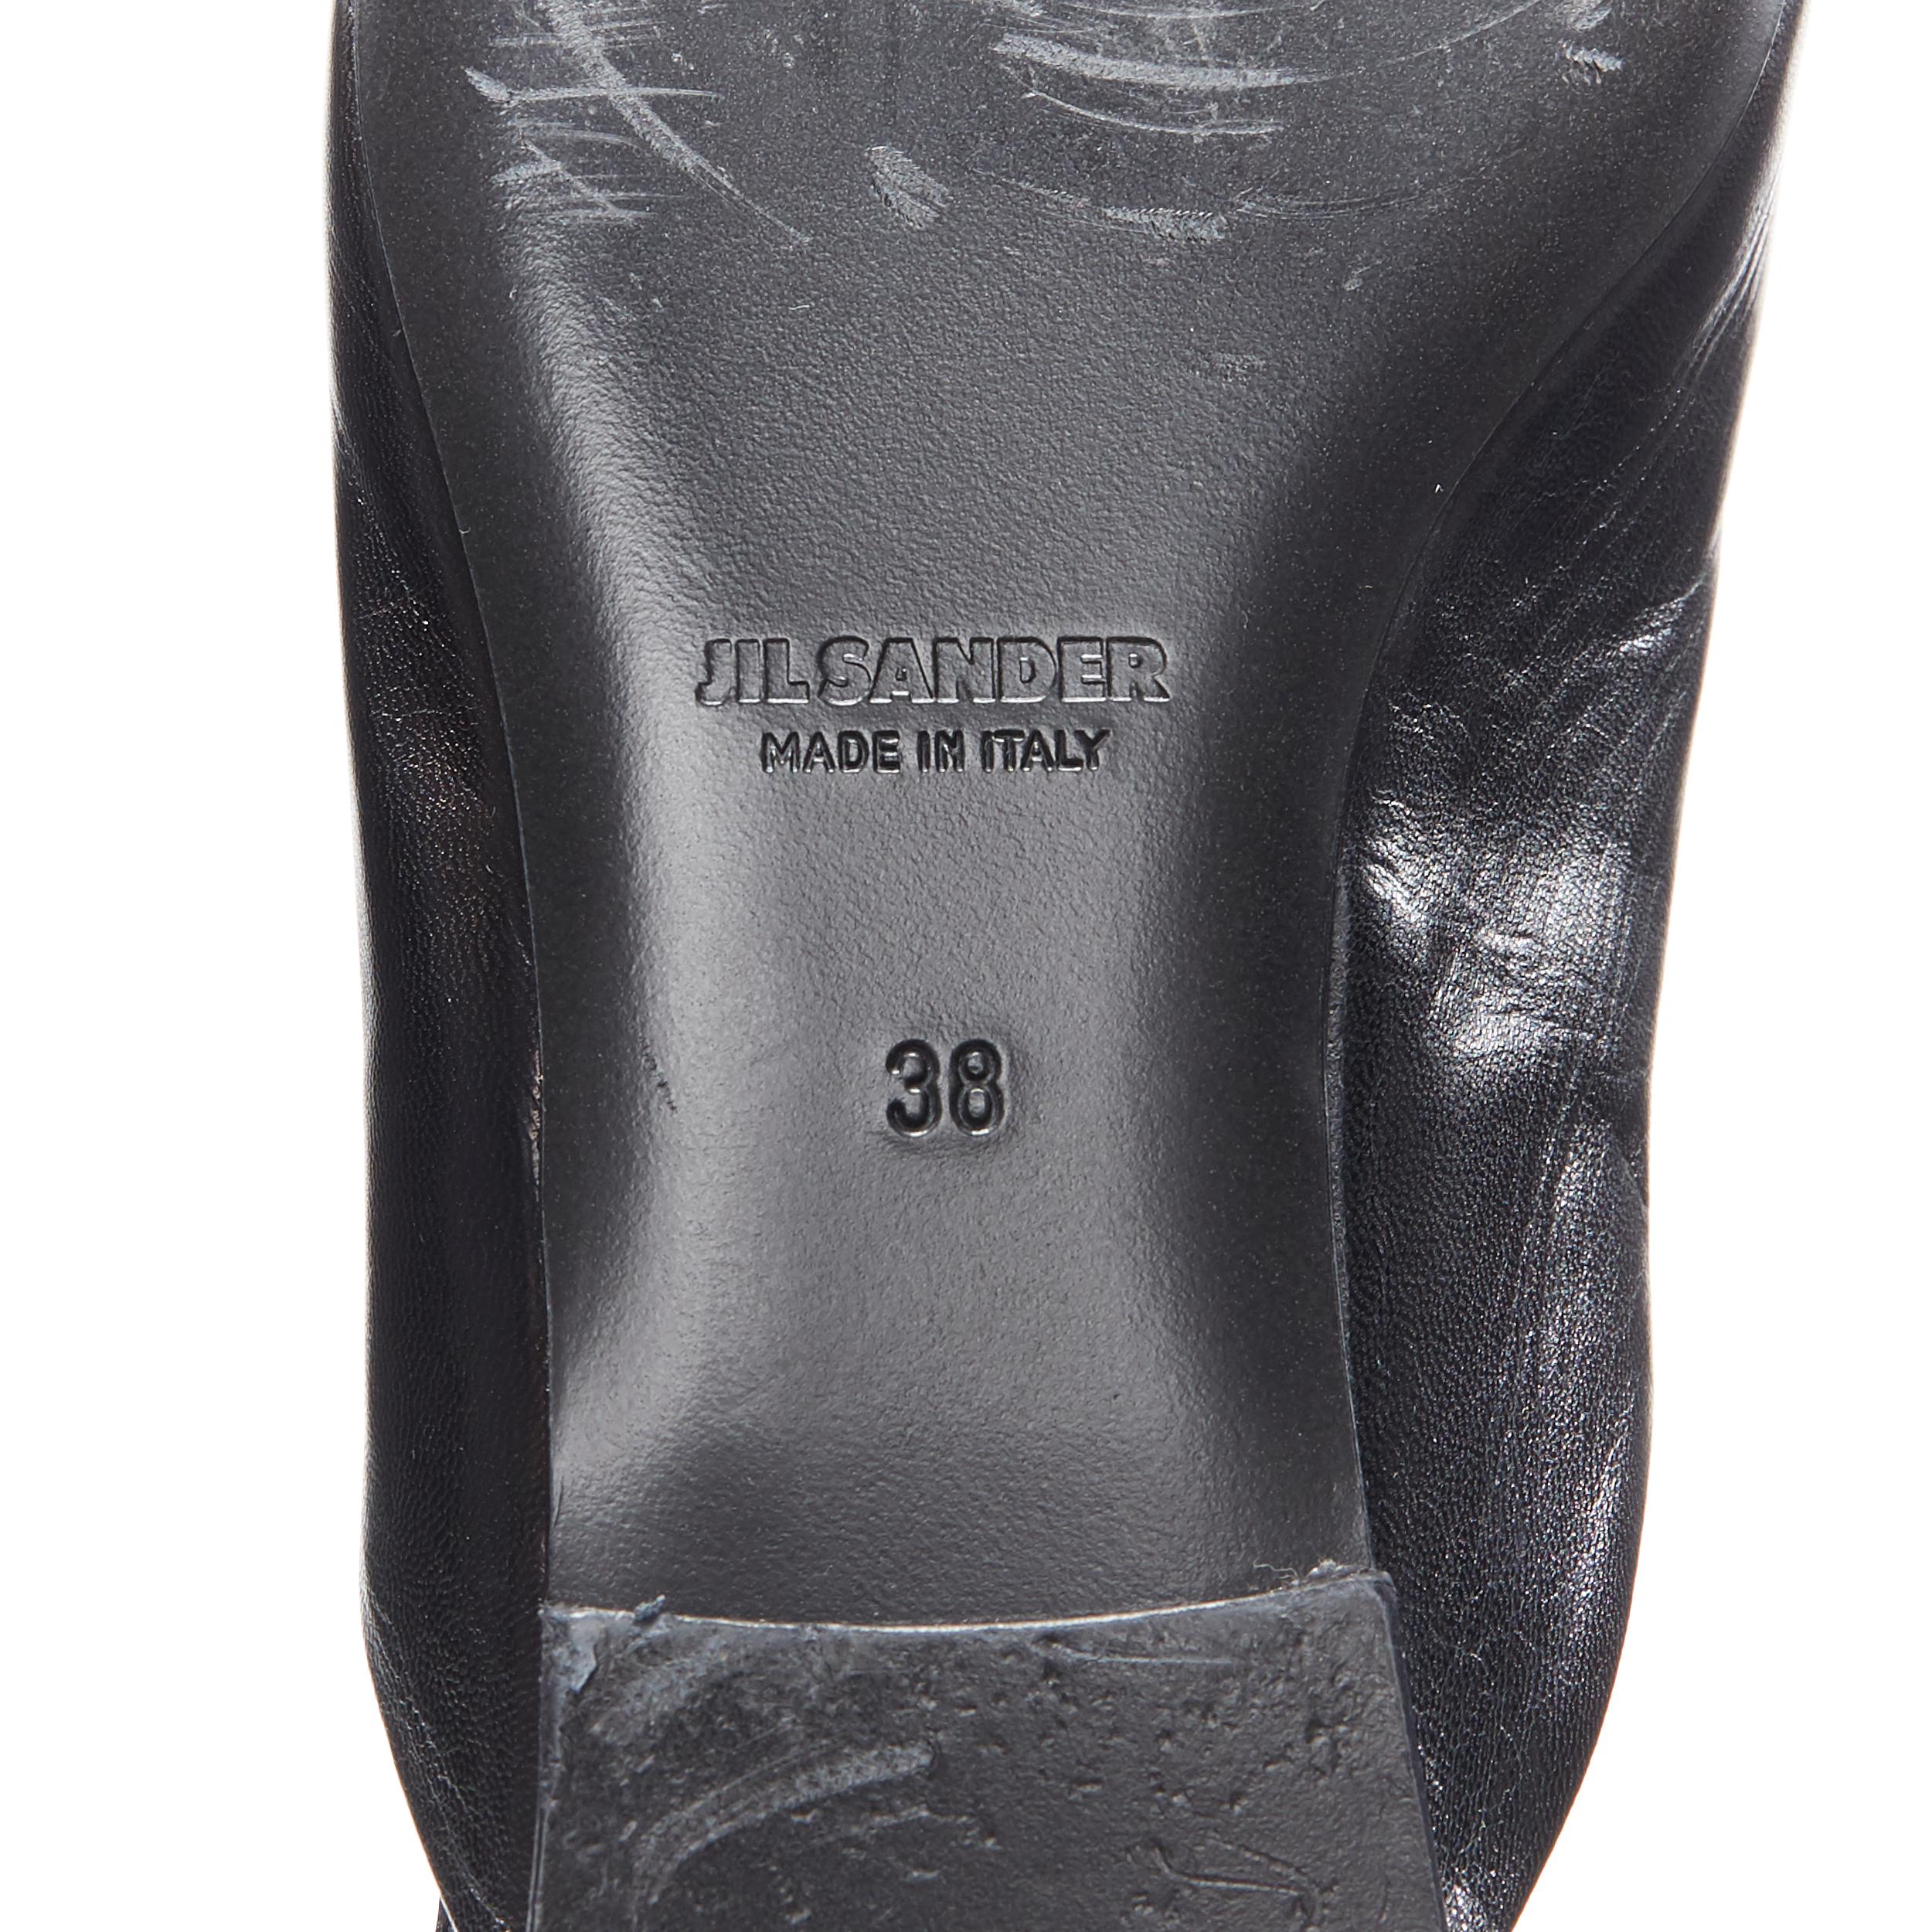 JIL SANDER black leather point toe  silver metal cuff anklet flats shoes EU38 3